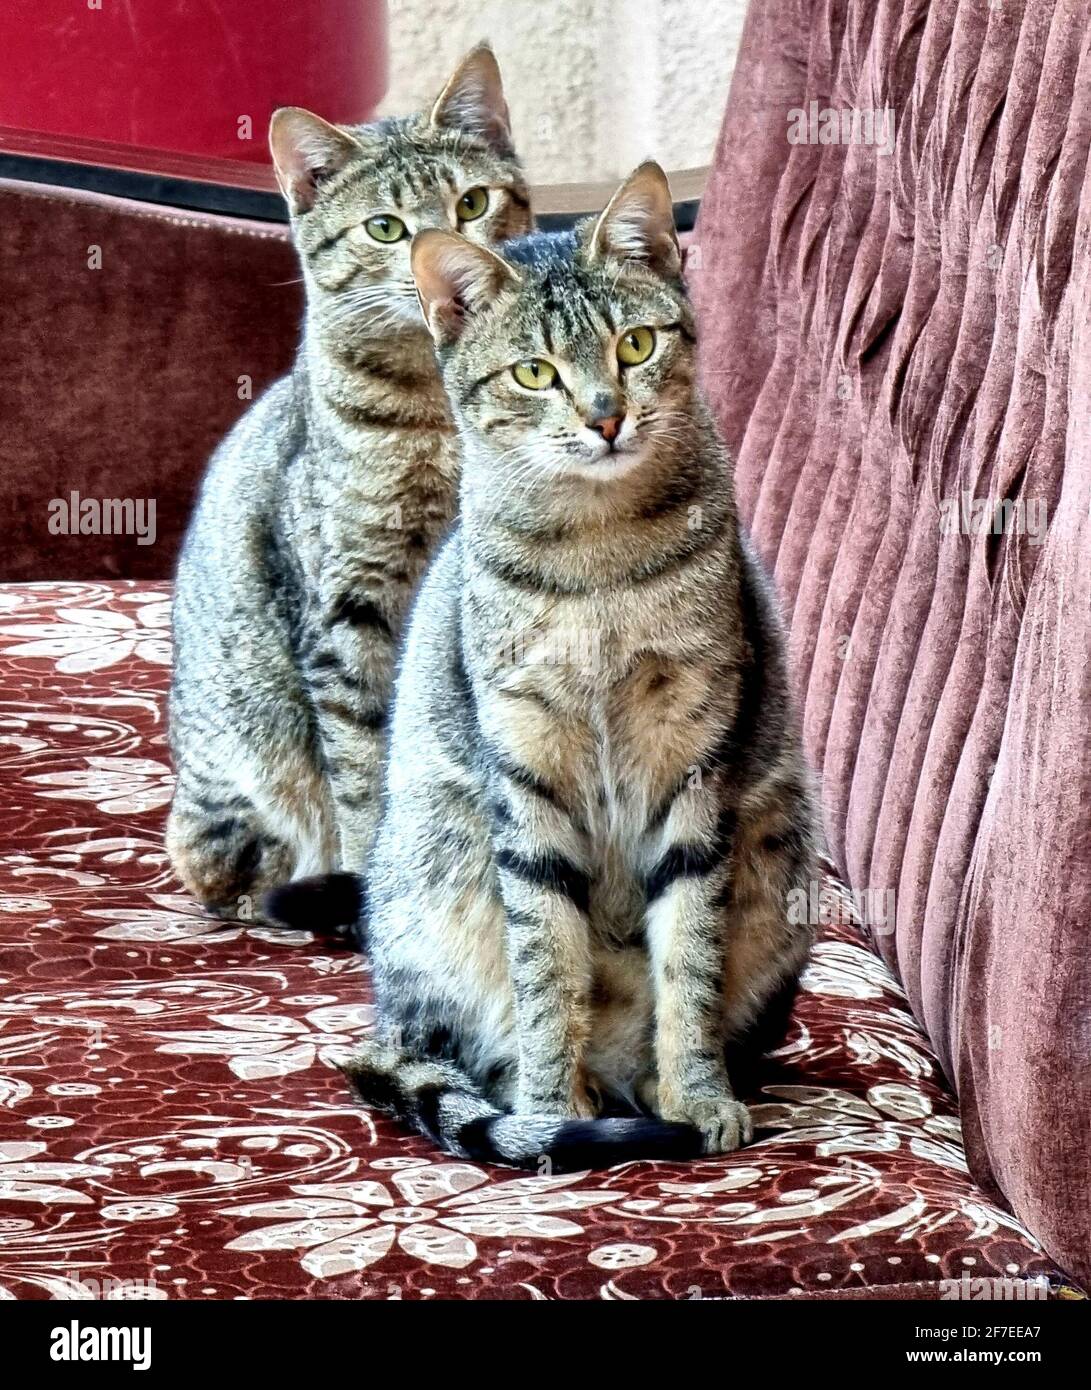 photo of beautiful cat from iraq Stock Photo - Alamy